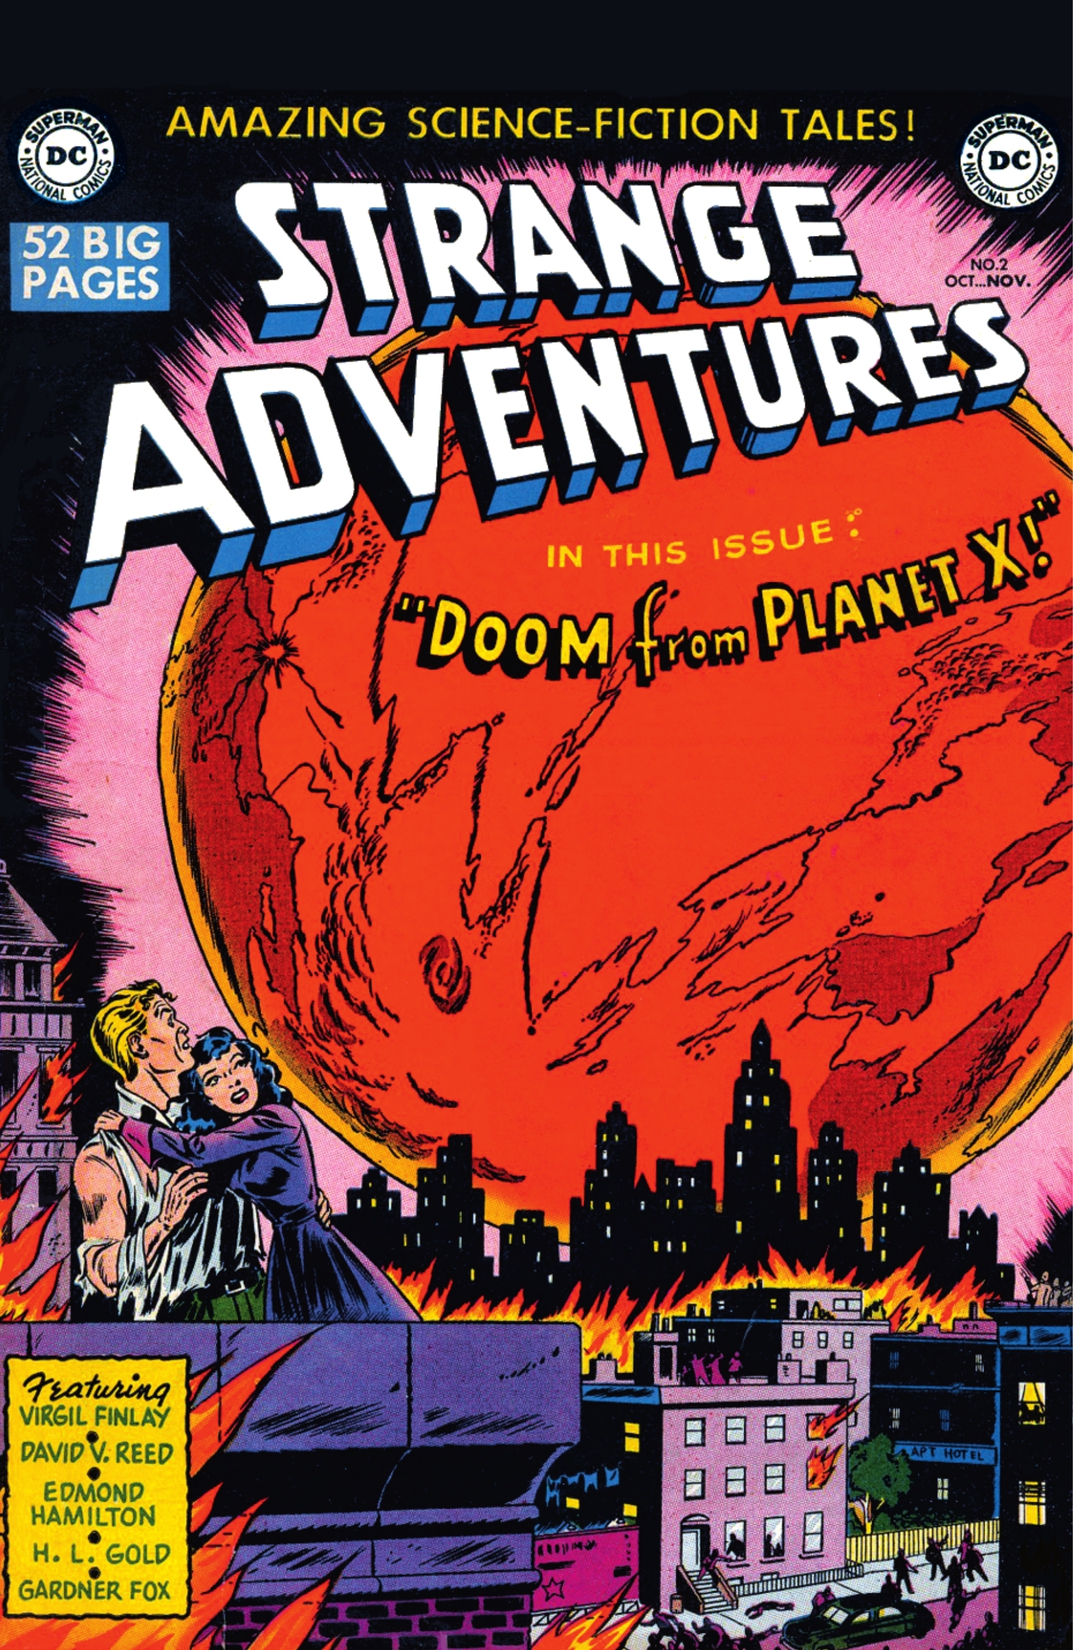 Strange Adventures (1950-1973) #2 preview images